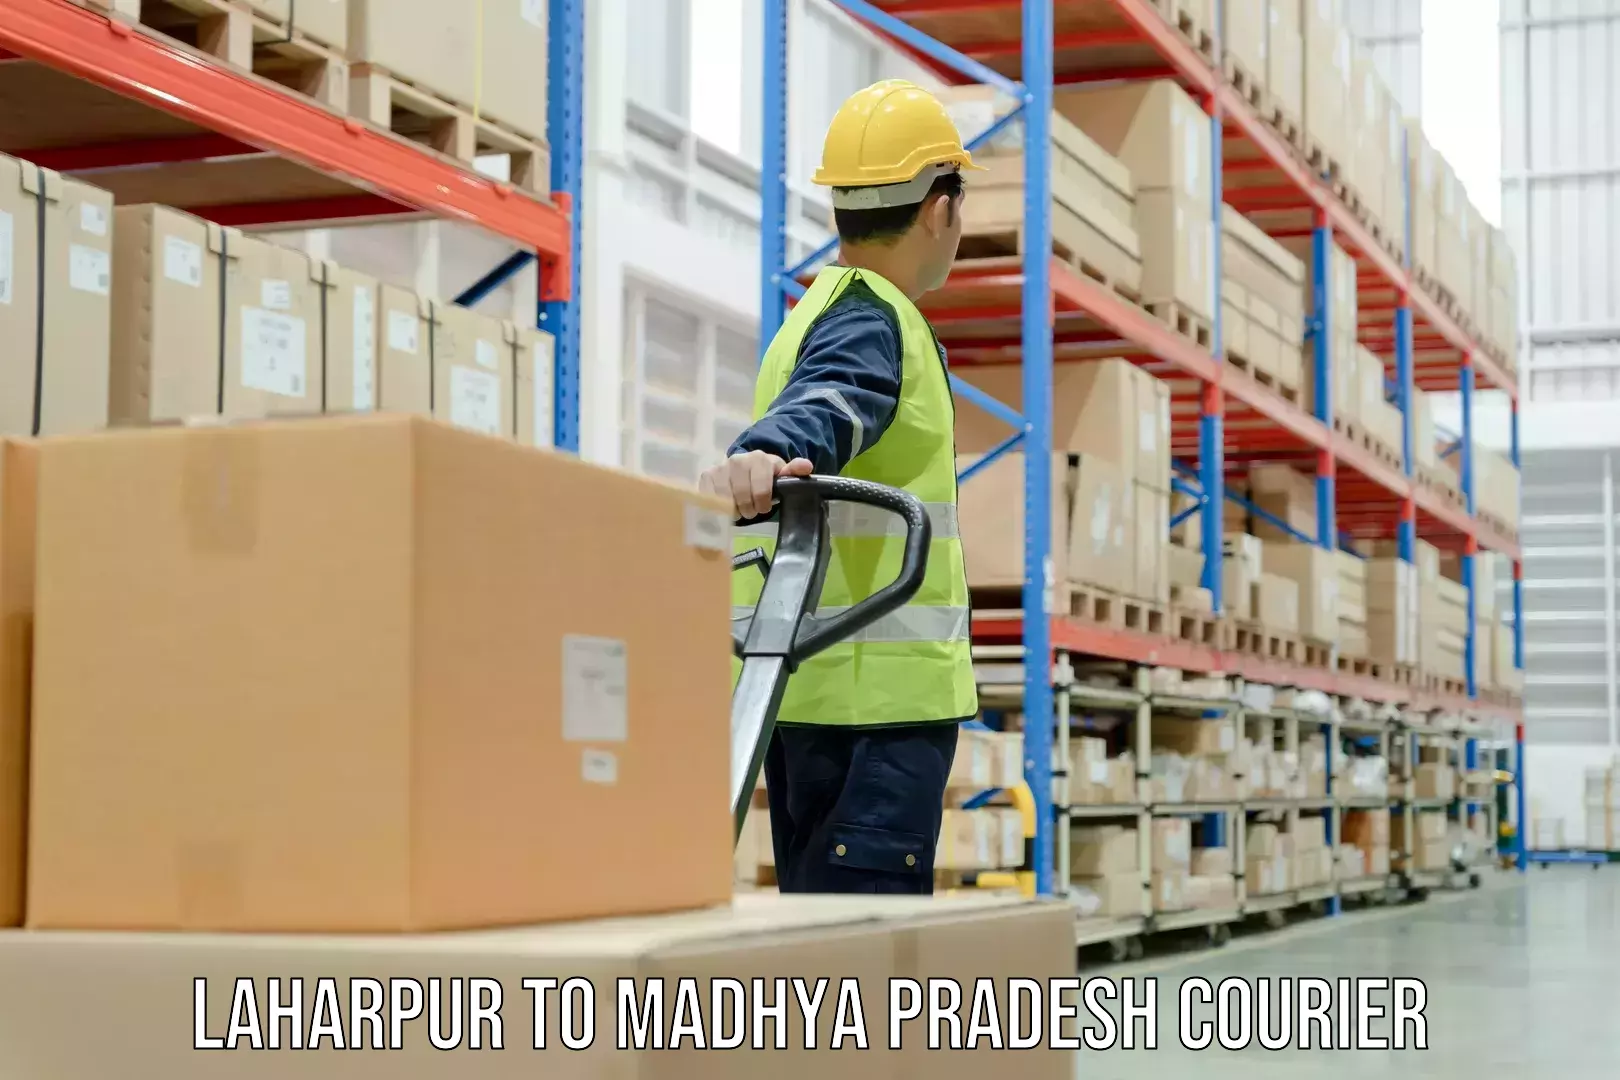 Professional courier handling Laharpur to Sagar